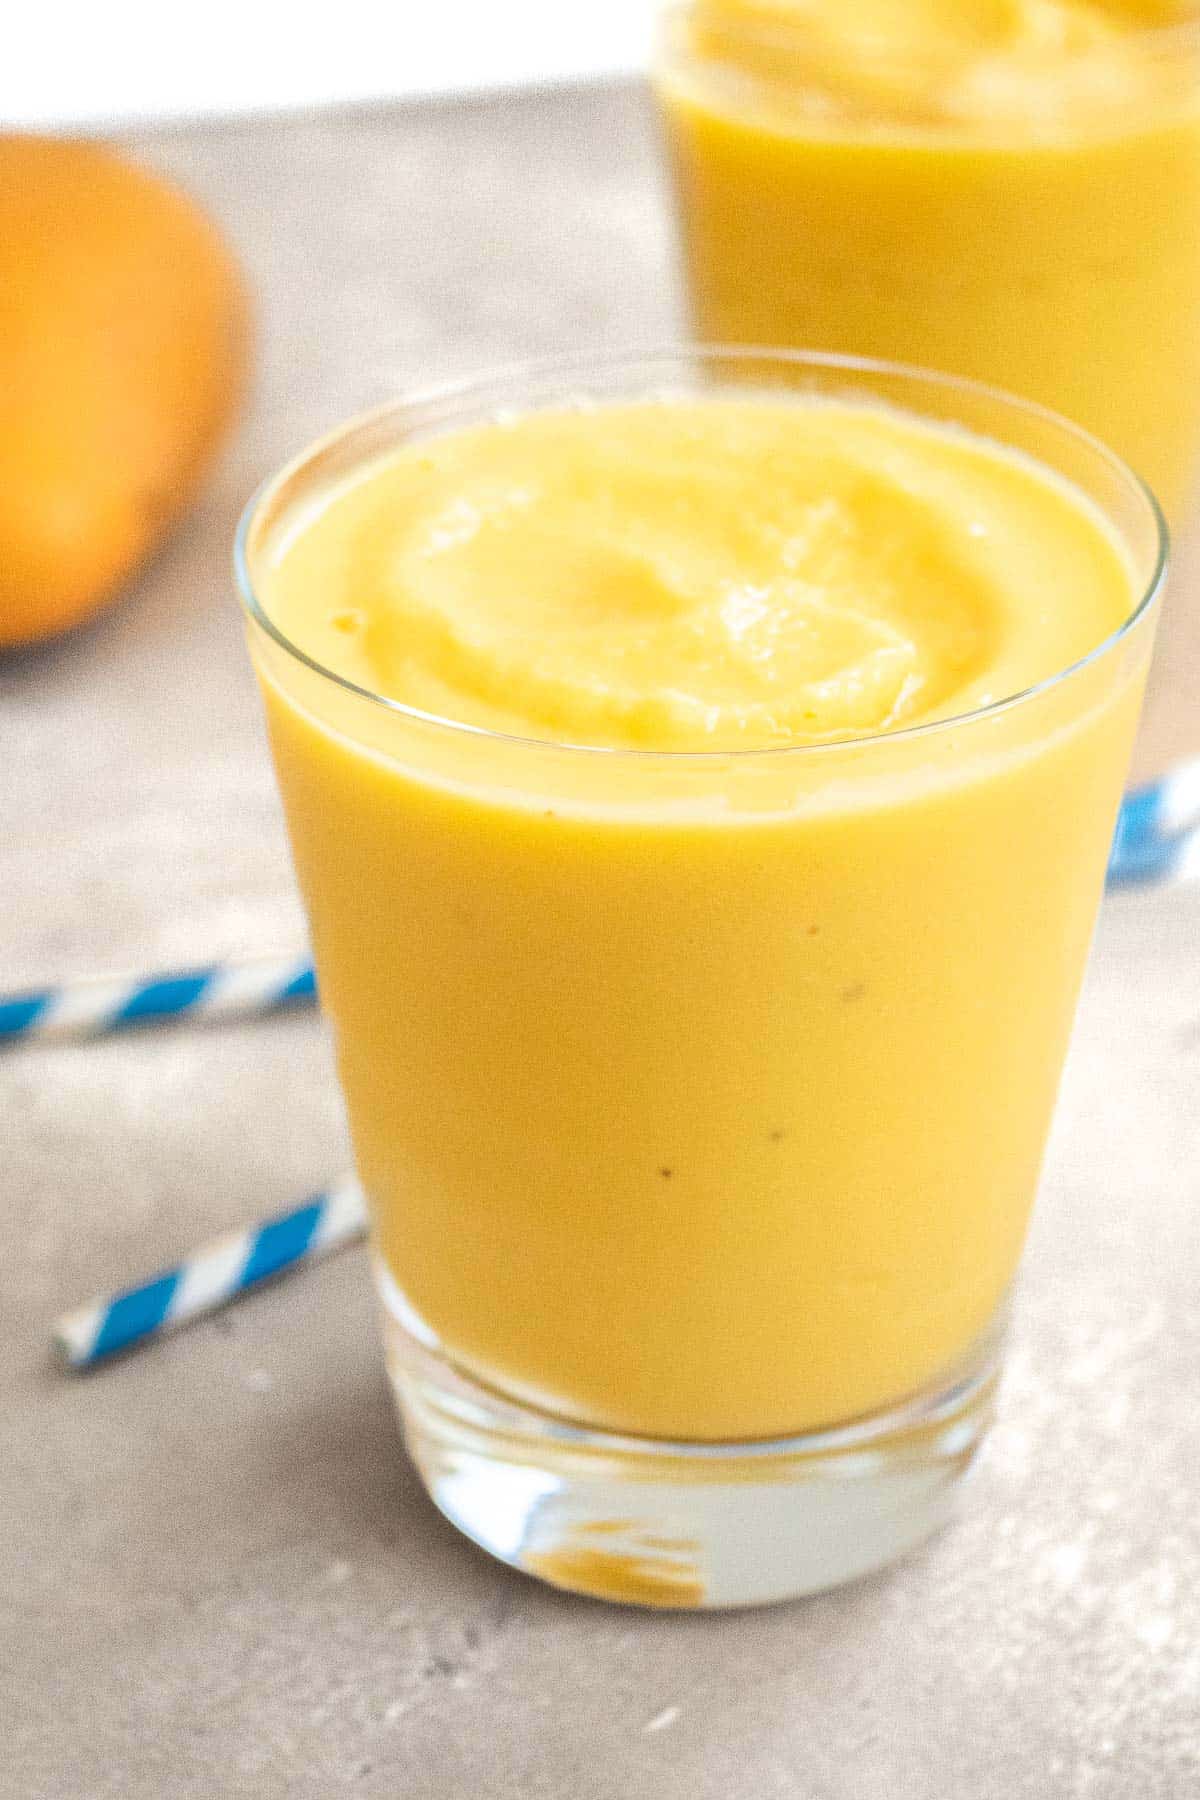 how to prepare mango for smoothie